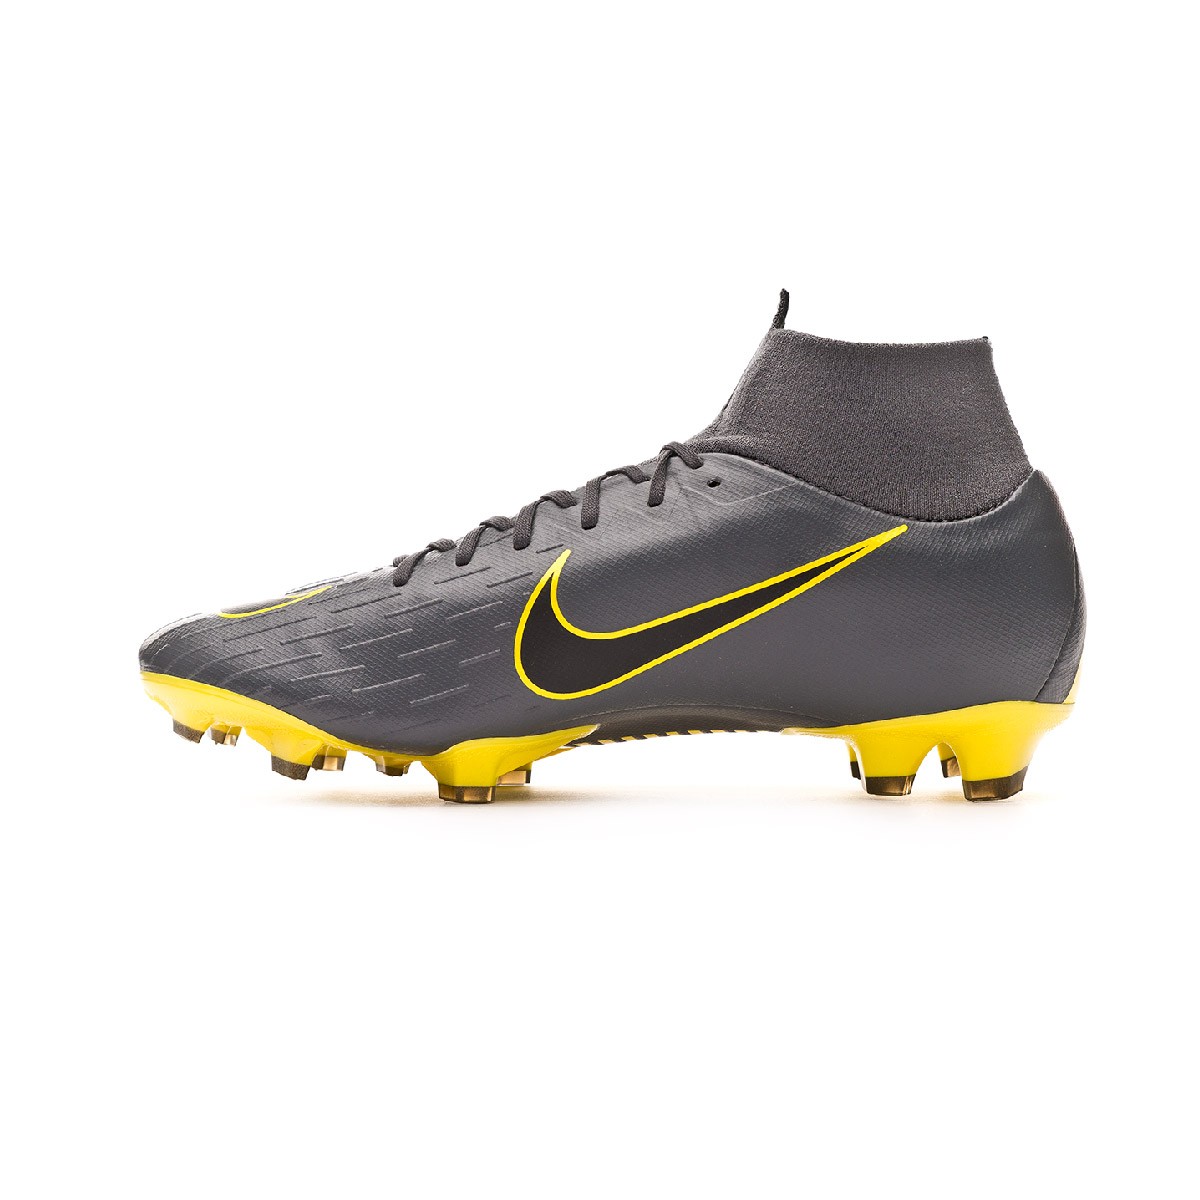 Bota de fútbol Nike Mercurial Superfly VI Pro FG Dark grey-Black-Optical  yellow - Tienda de fútbol Fútbol Emotion